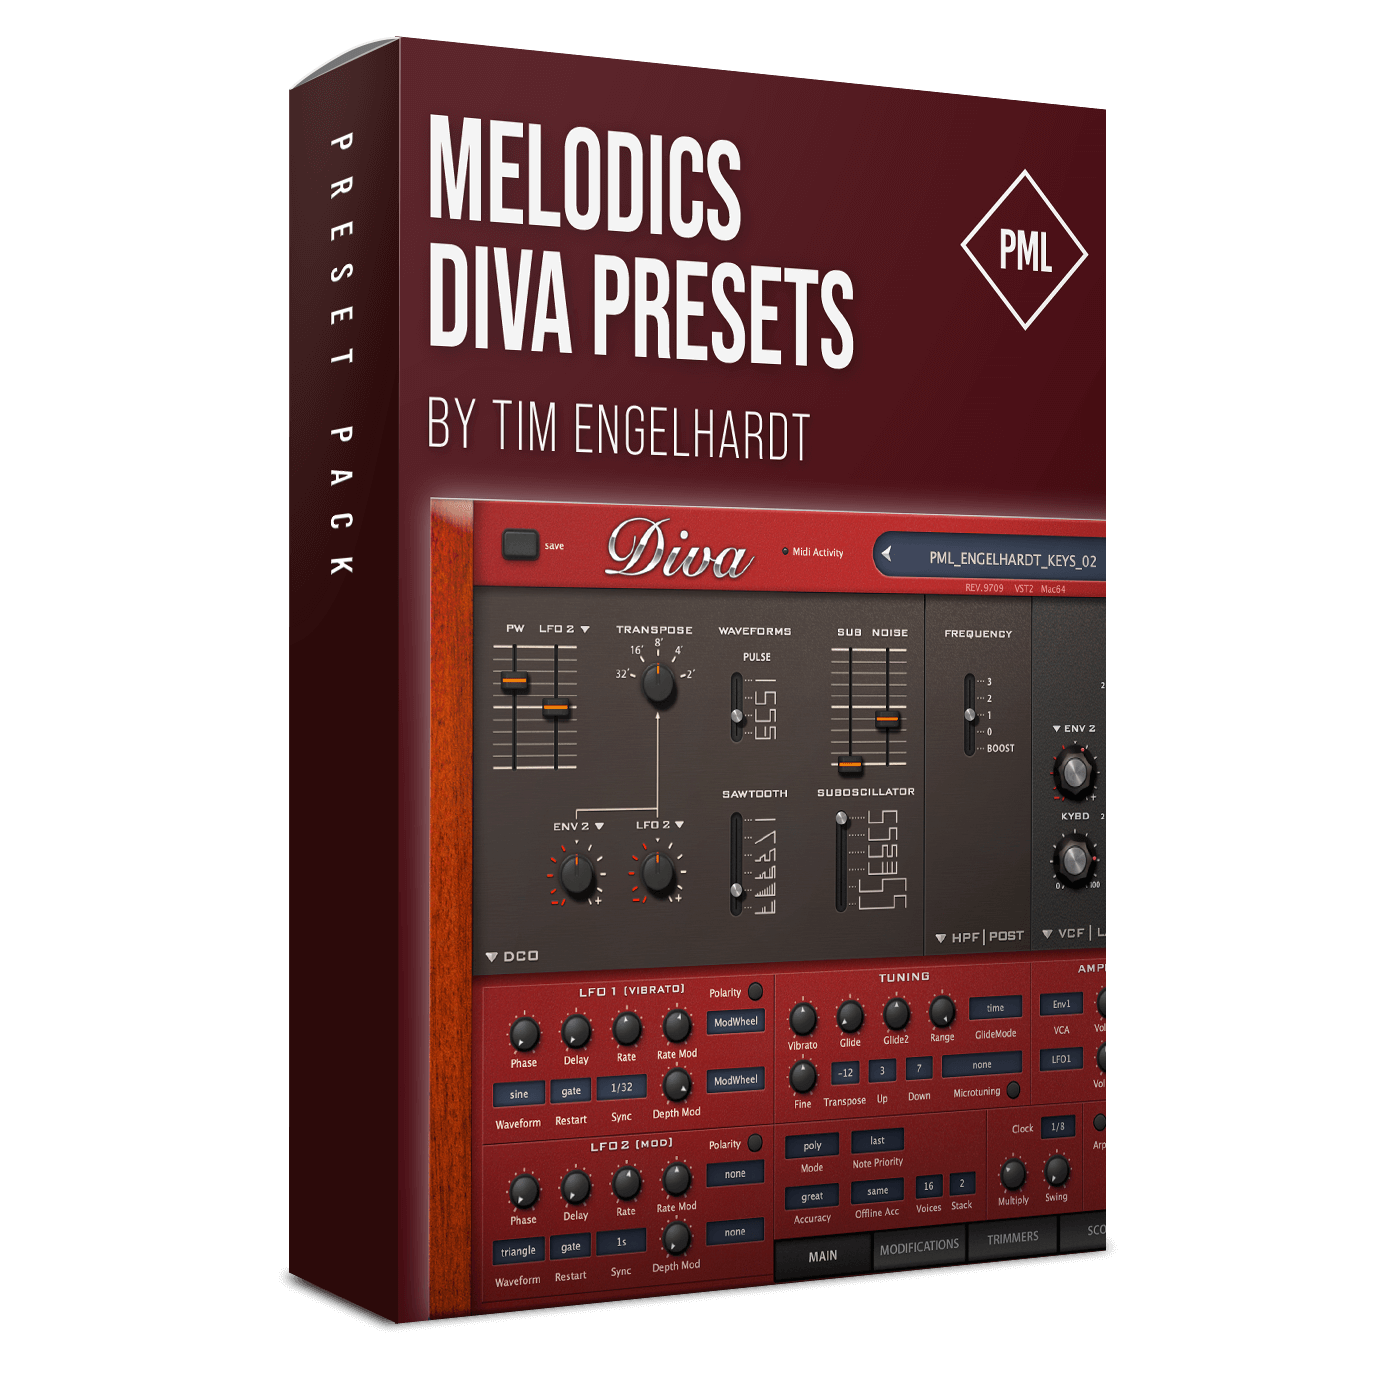 Diva Preset Pack - Melodics by Tim Engelhardt